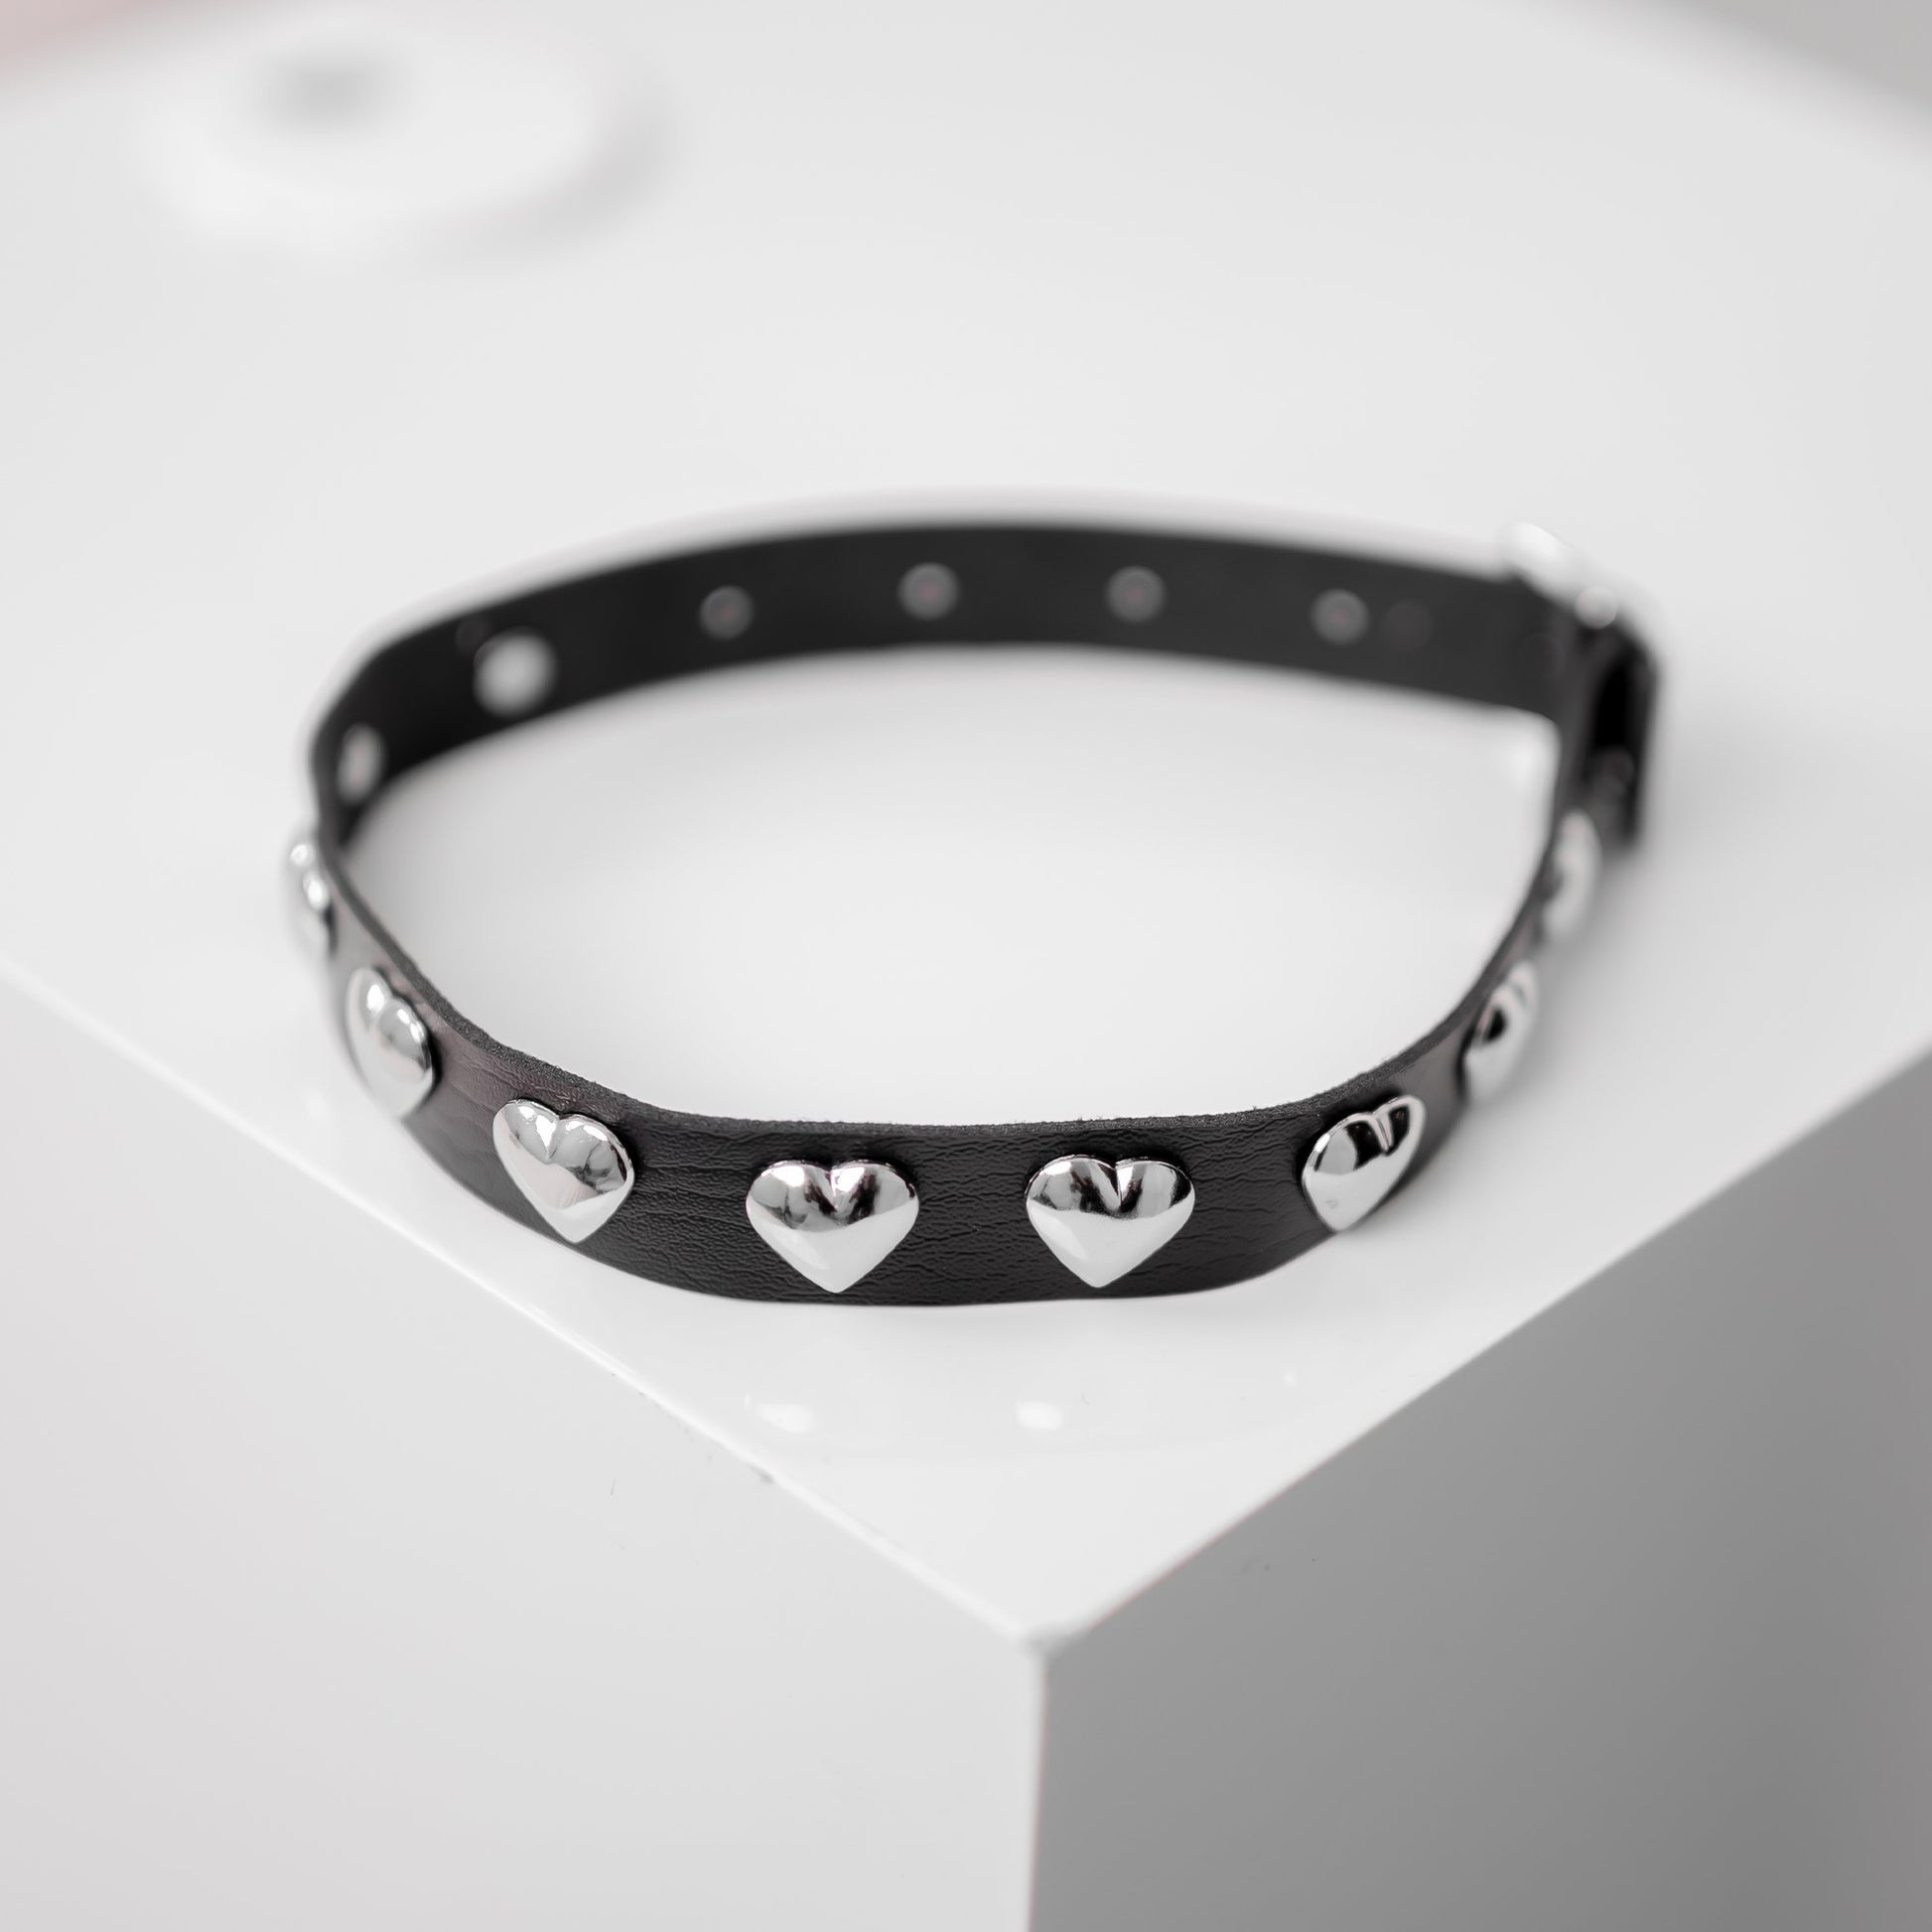 Black Heart-Shaped Choker Necklace by Lewd Fashion